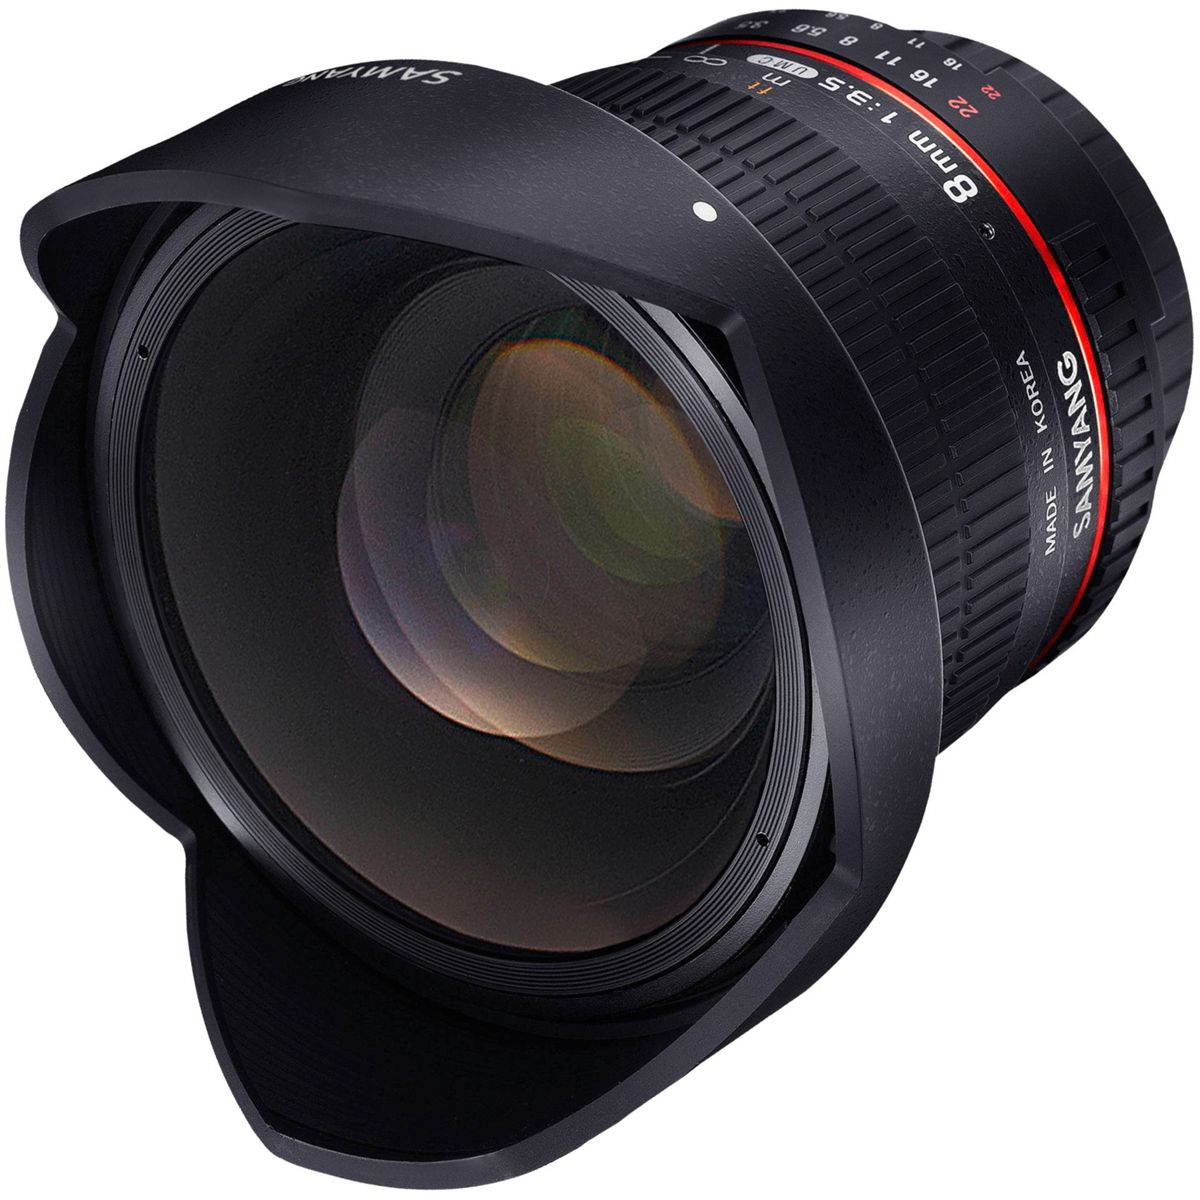 SAMYANG MF 3,5/8 für 3:30 II F-Mount APS-C Nikon Fish-Eye (Objektiv Nikon AE